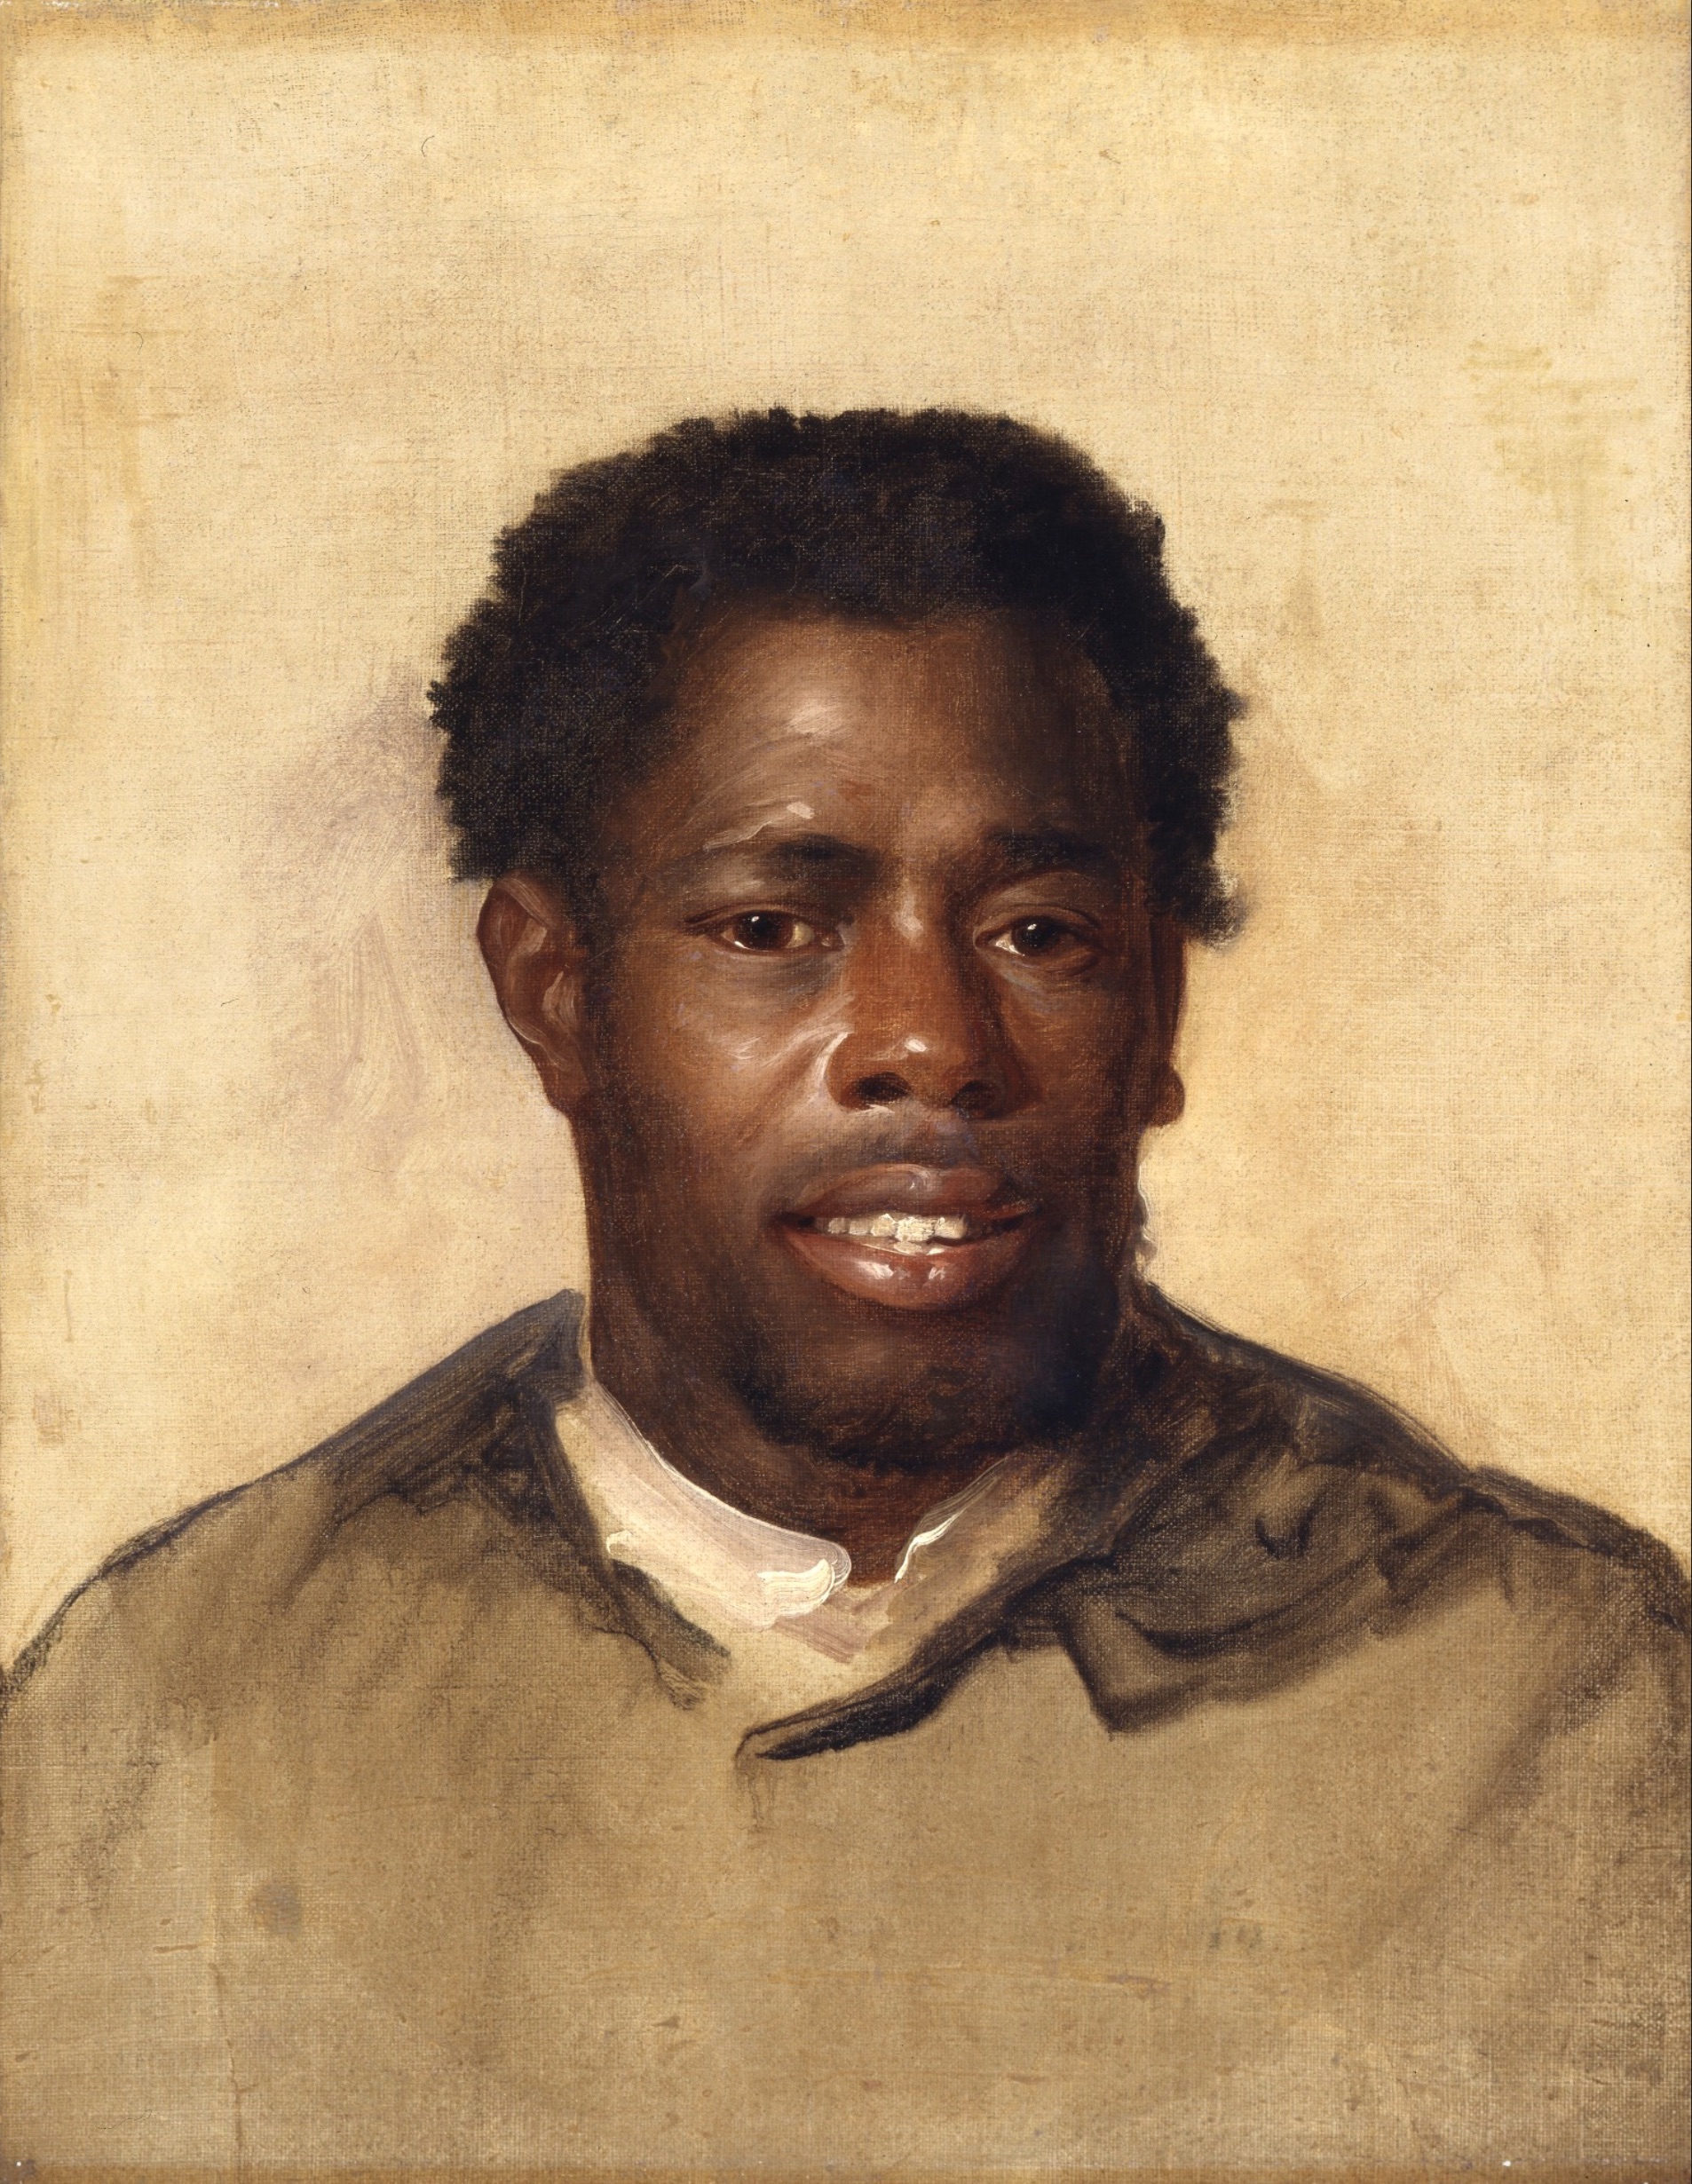 Slavery Was the 'Good Faith' Disagreement Behind the Civil War